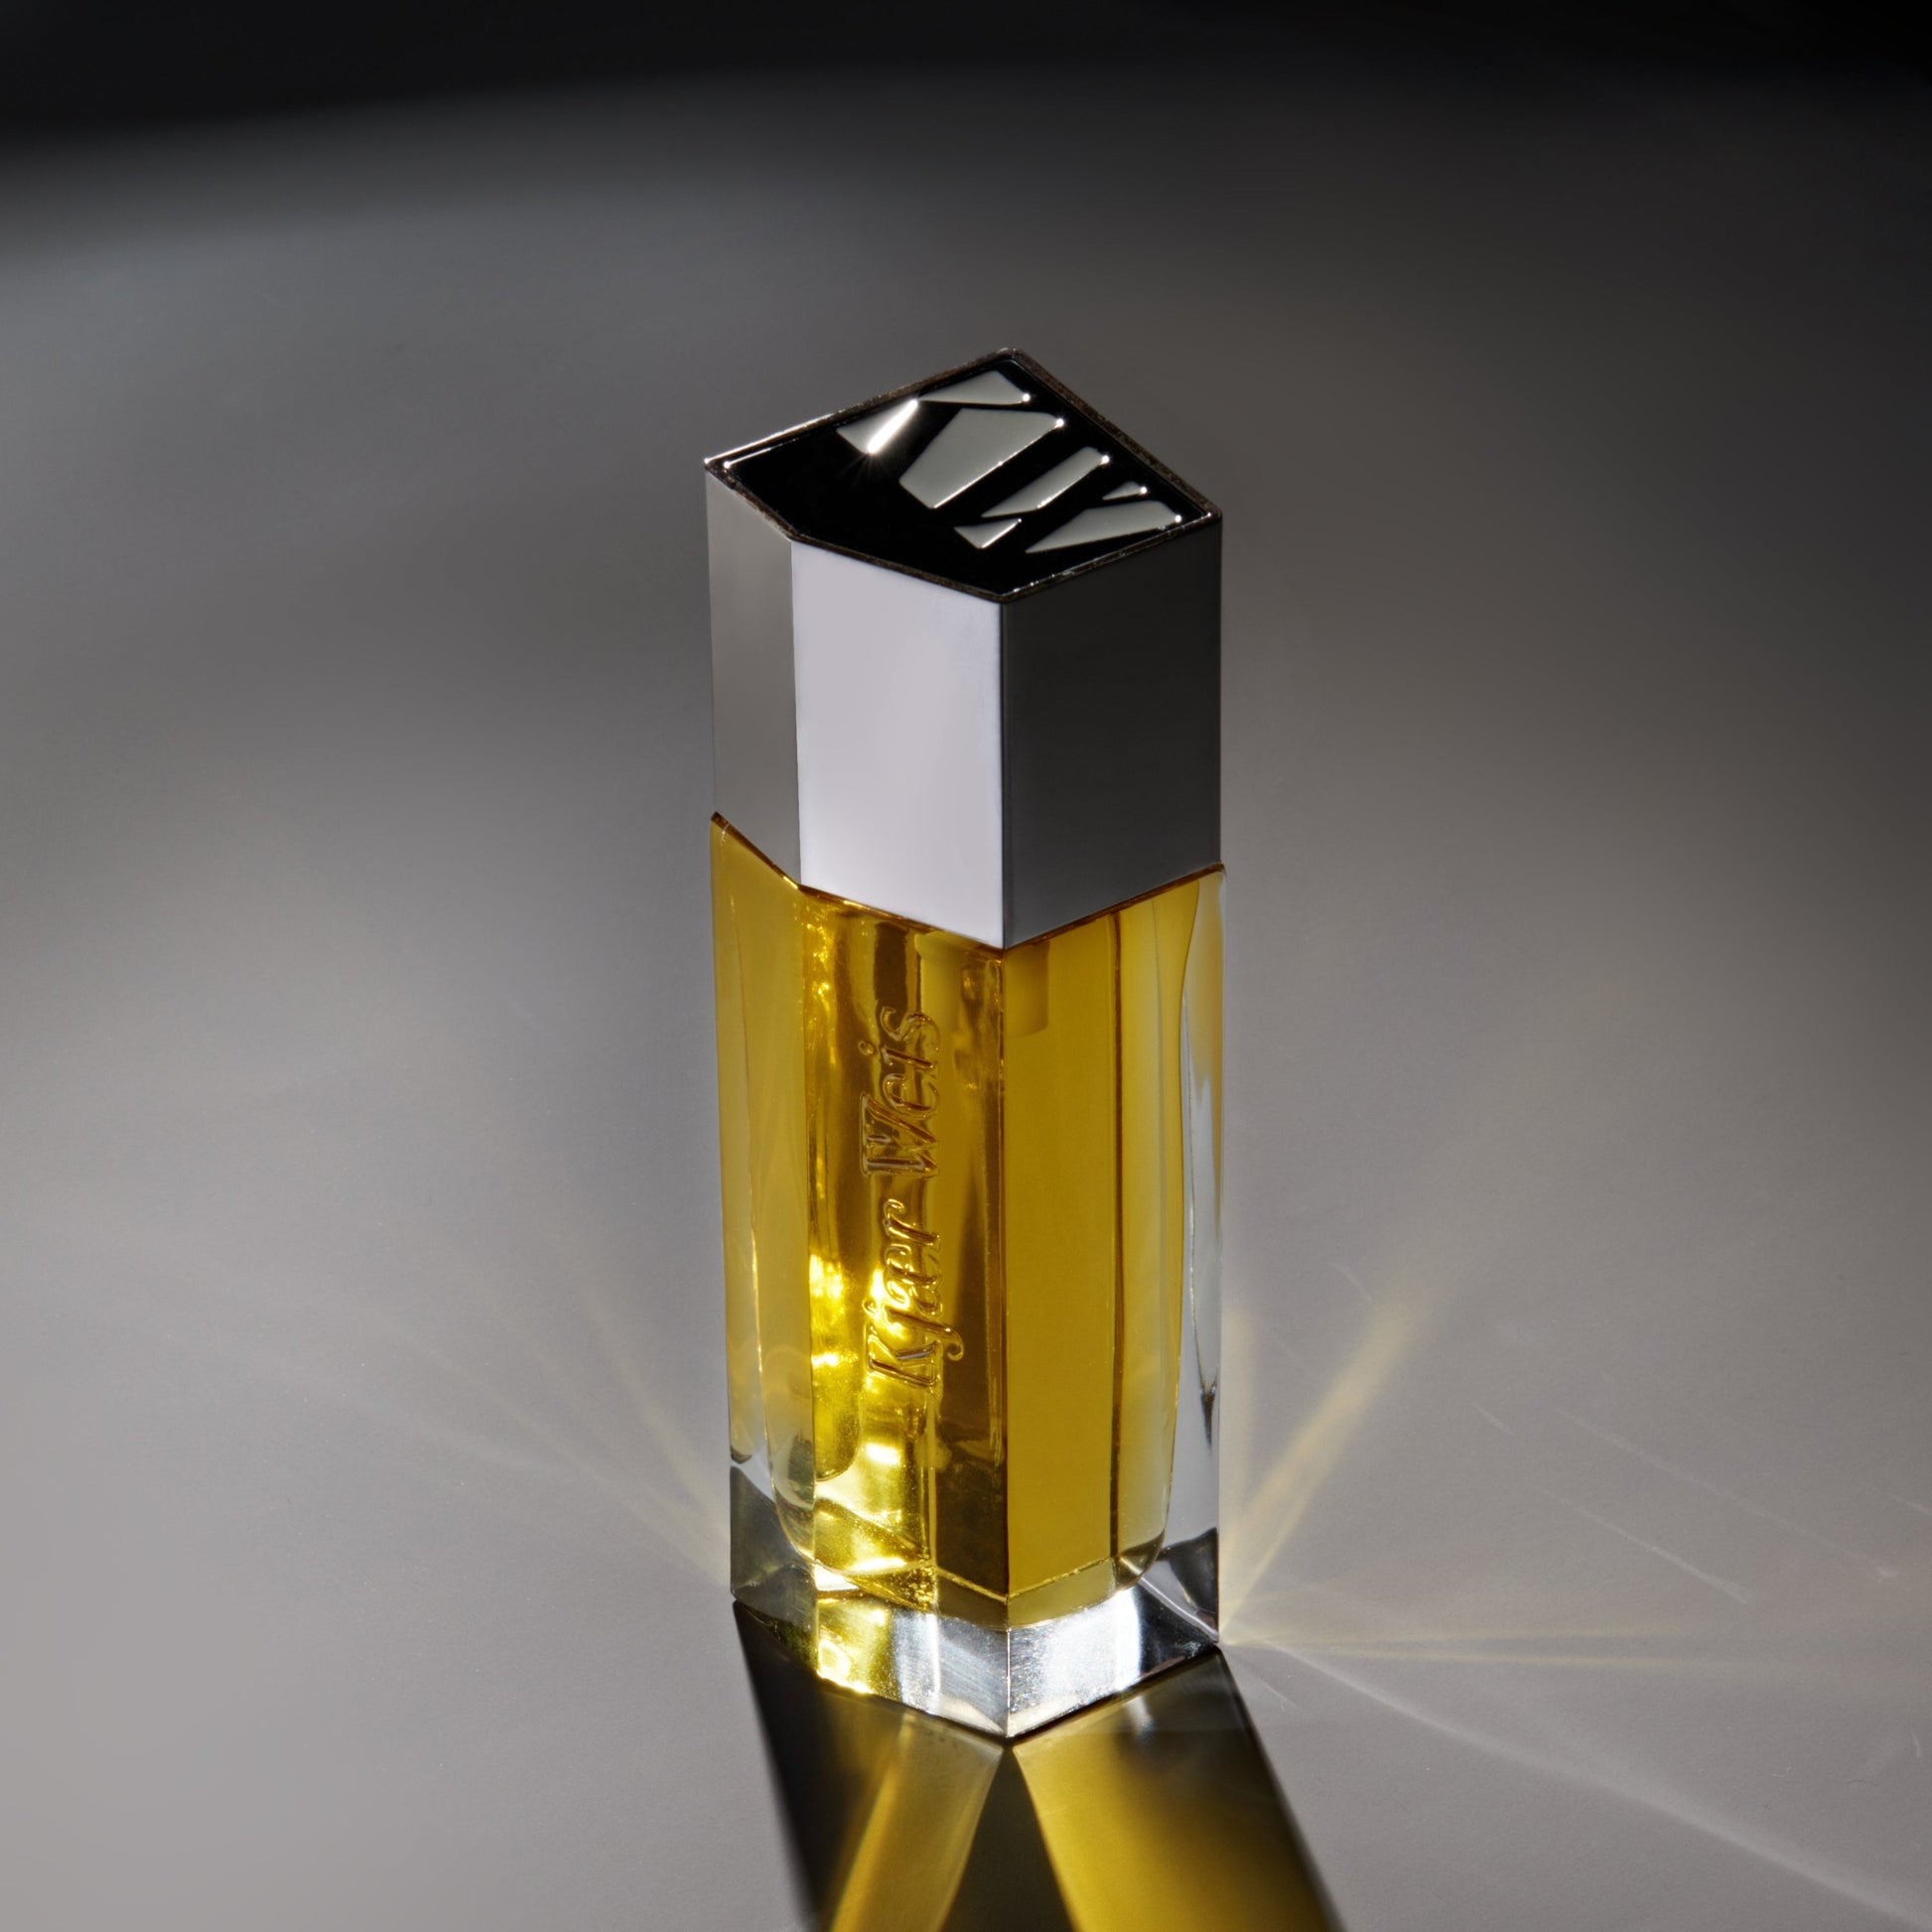 Kjaer Weis body oil in glass bottle reflecting light on a grey background